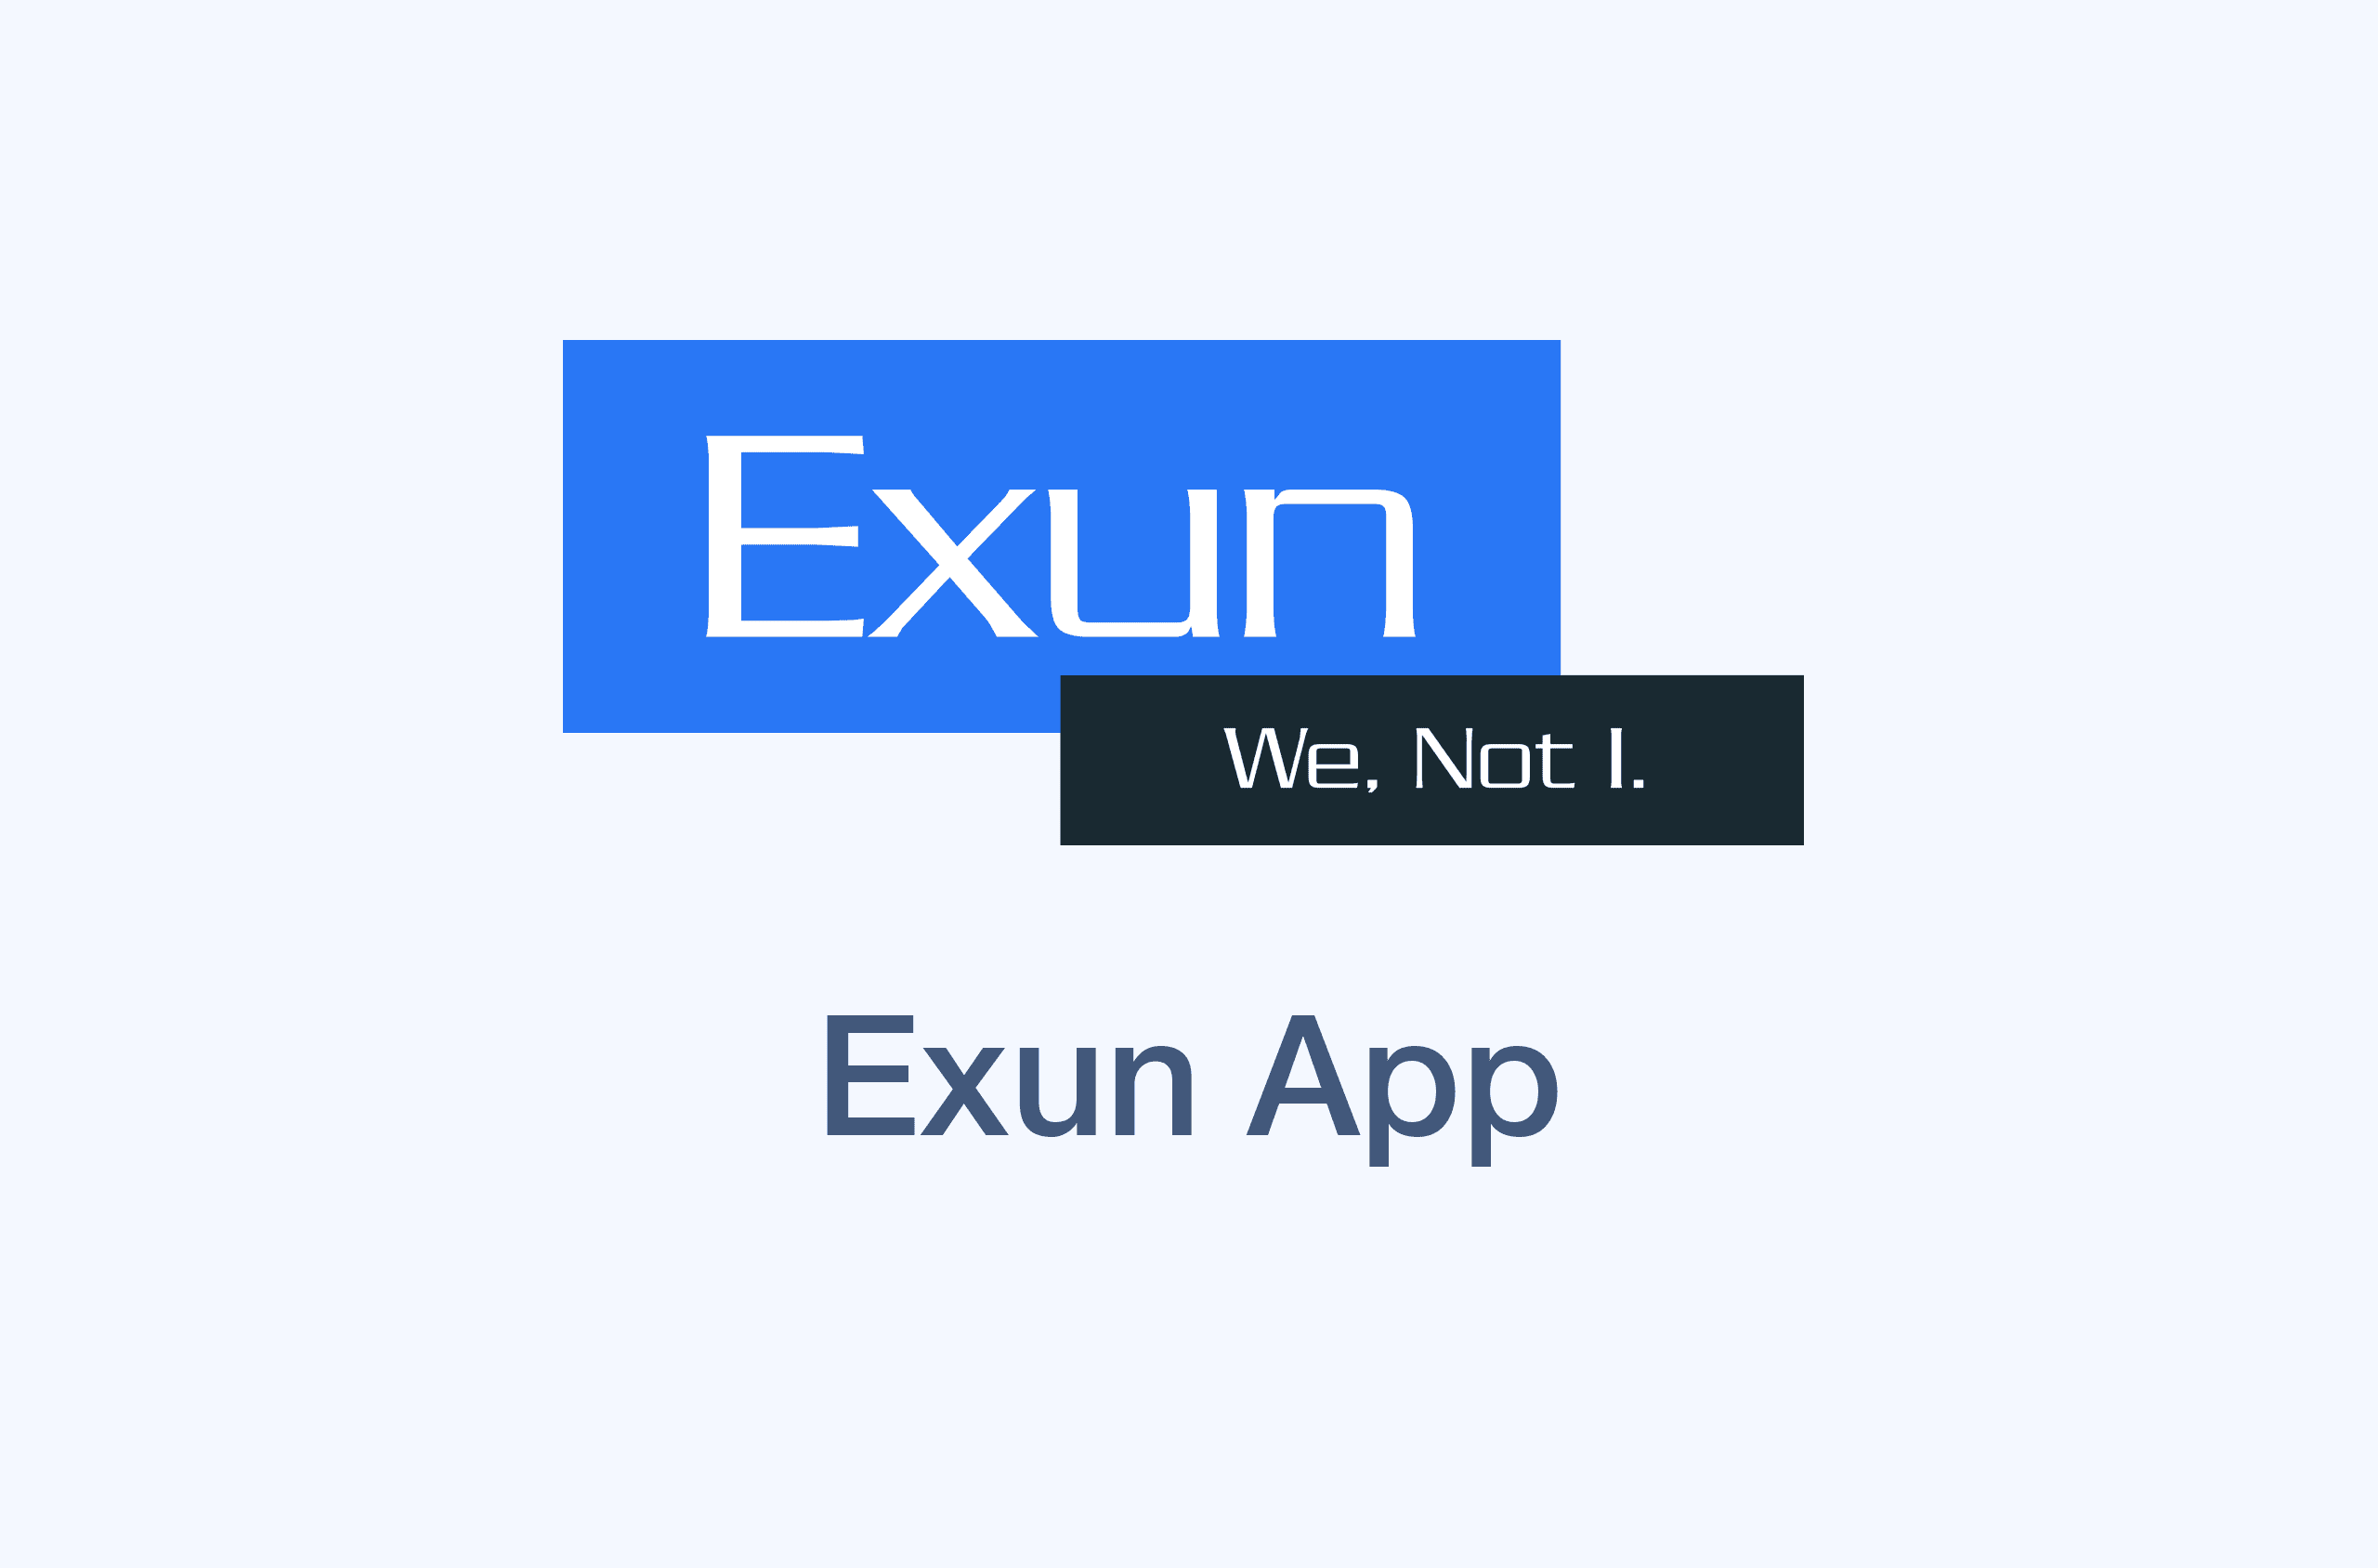 Exun App's image